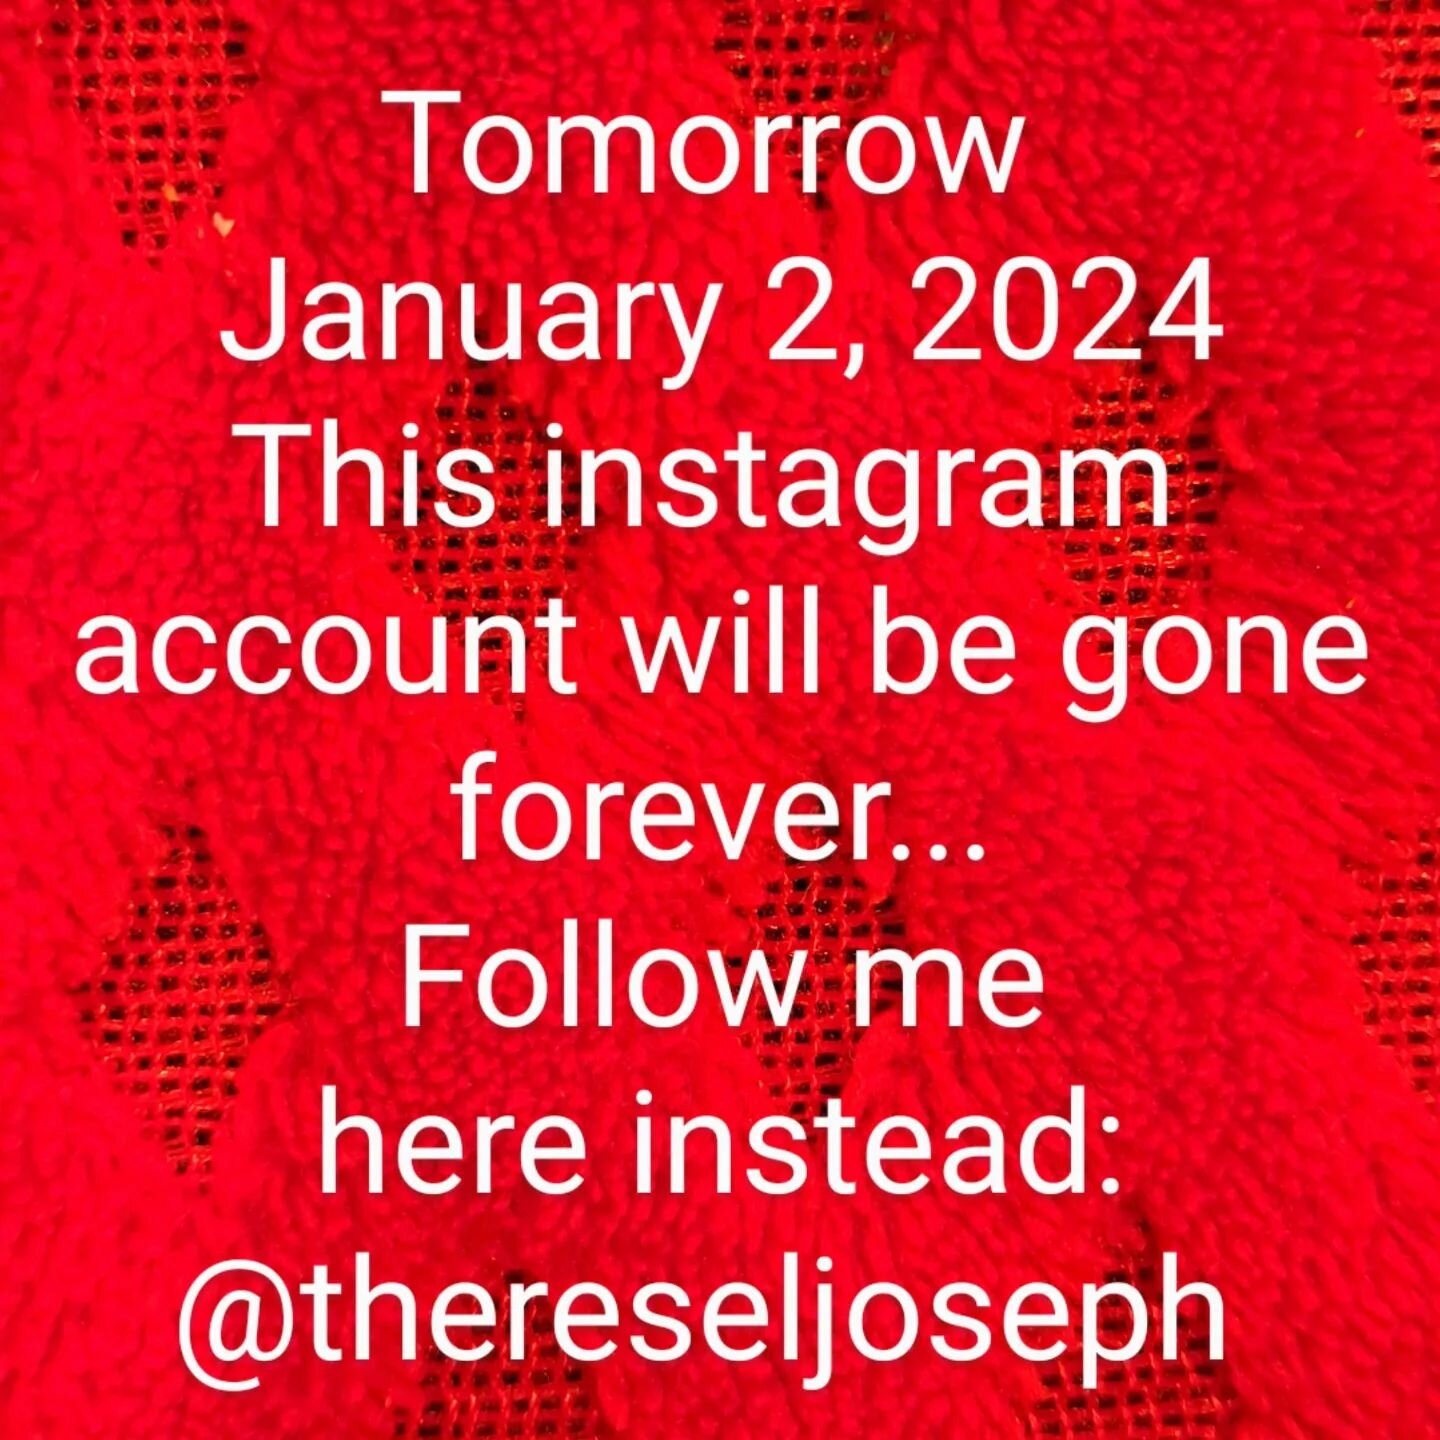 Follow me @thereseljoseph I'm closing this account  tomorrow